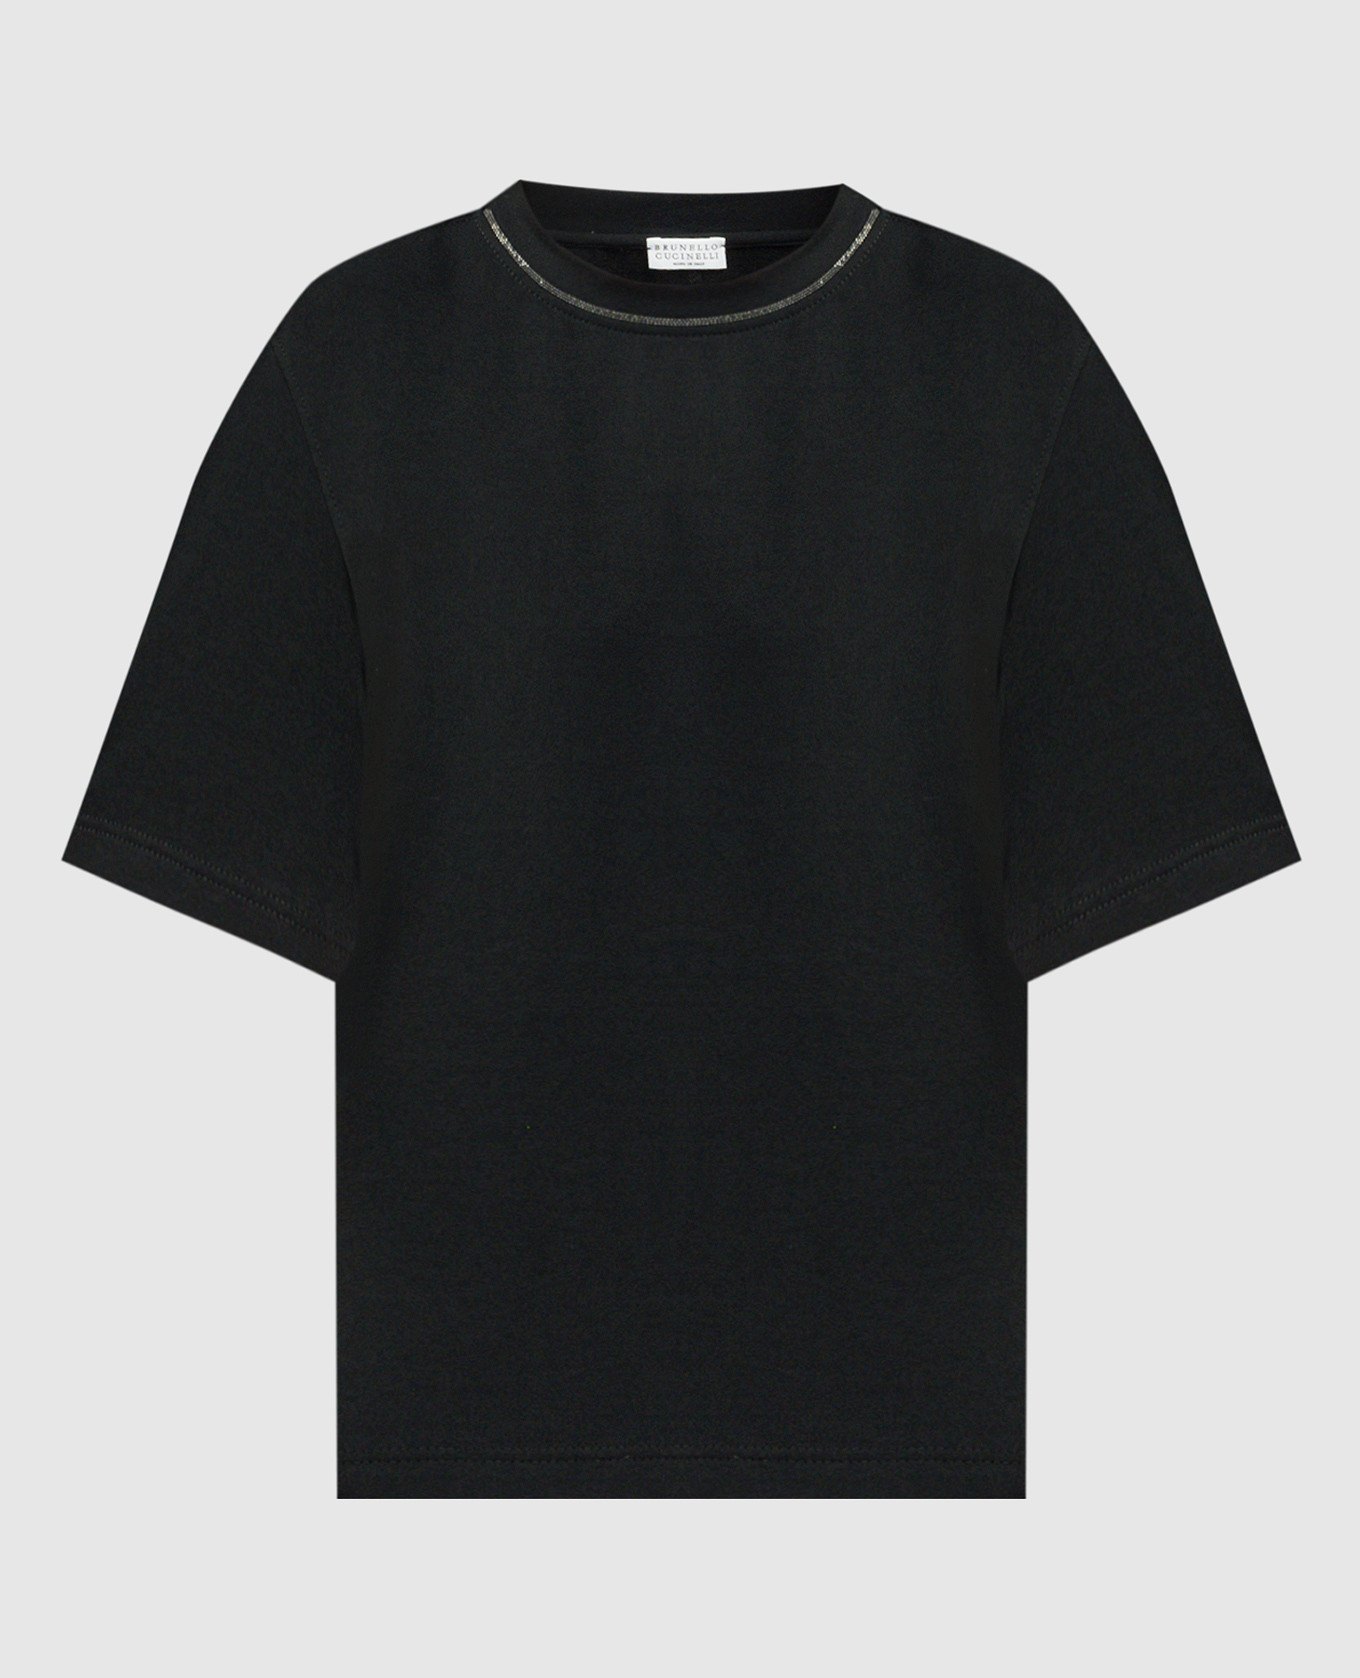 Black t-shirt with monil chain